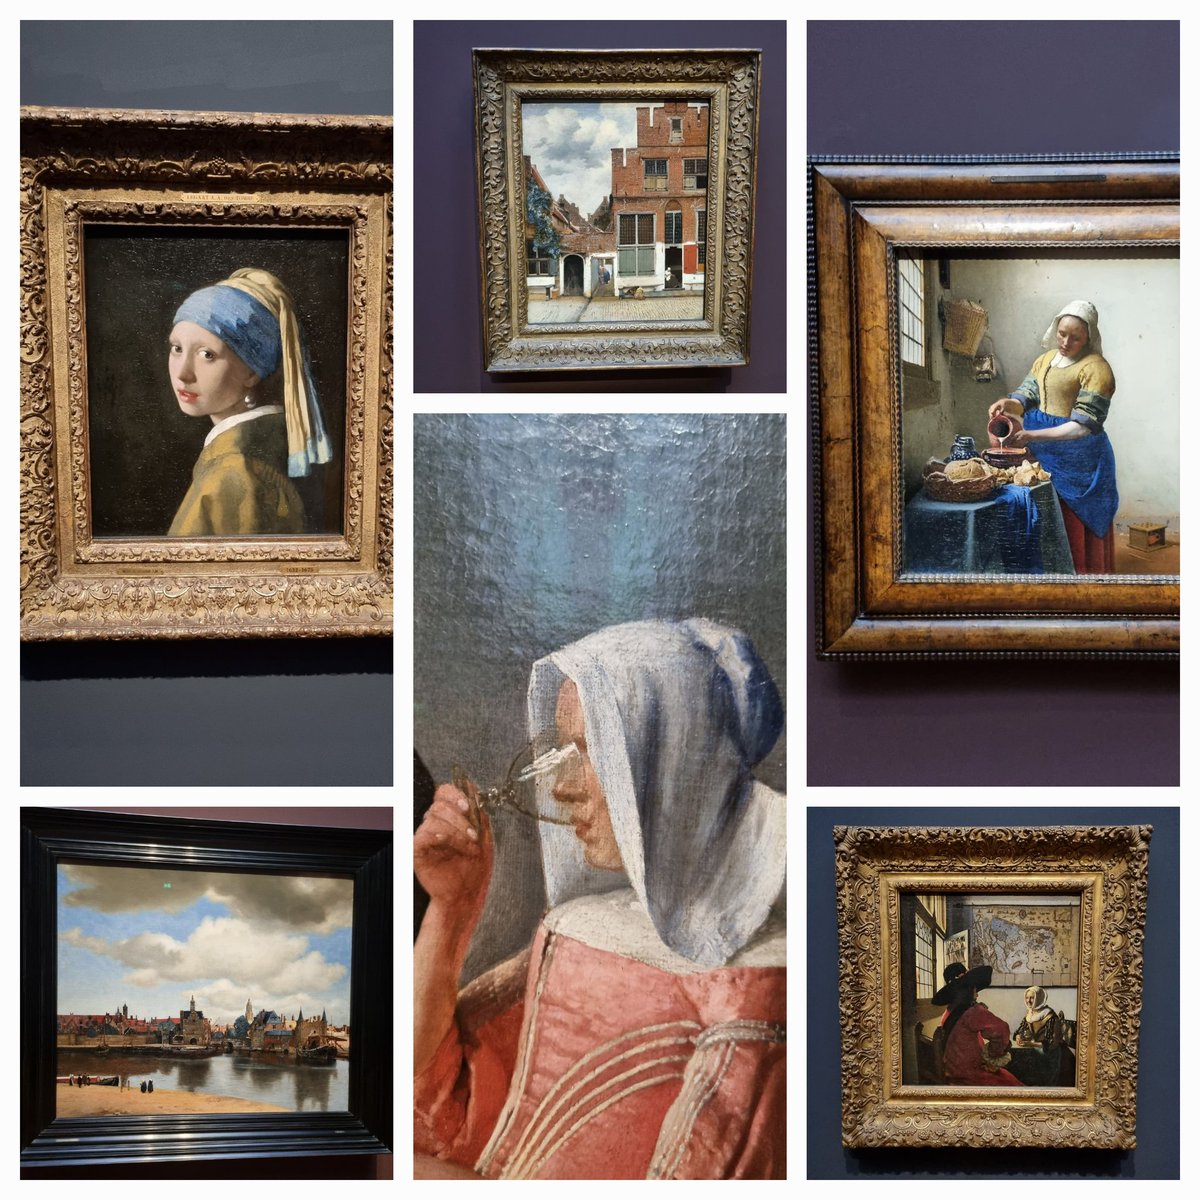 #psphoto amazing #johannesvermeer exhibition #rijksmuseum #Amsterdam thx to #kpn